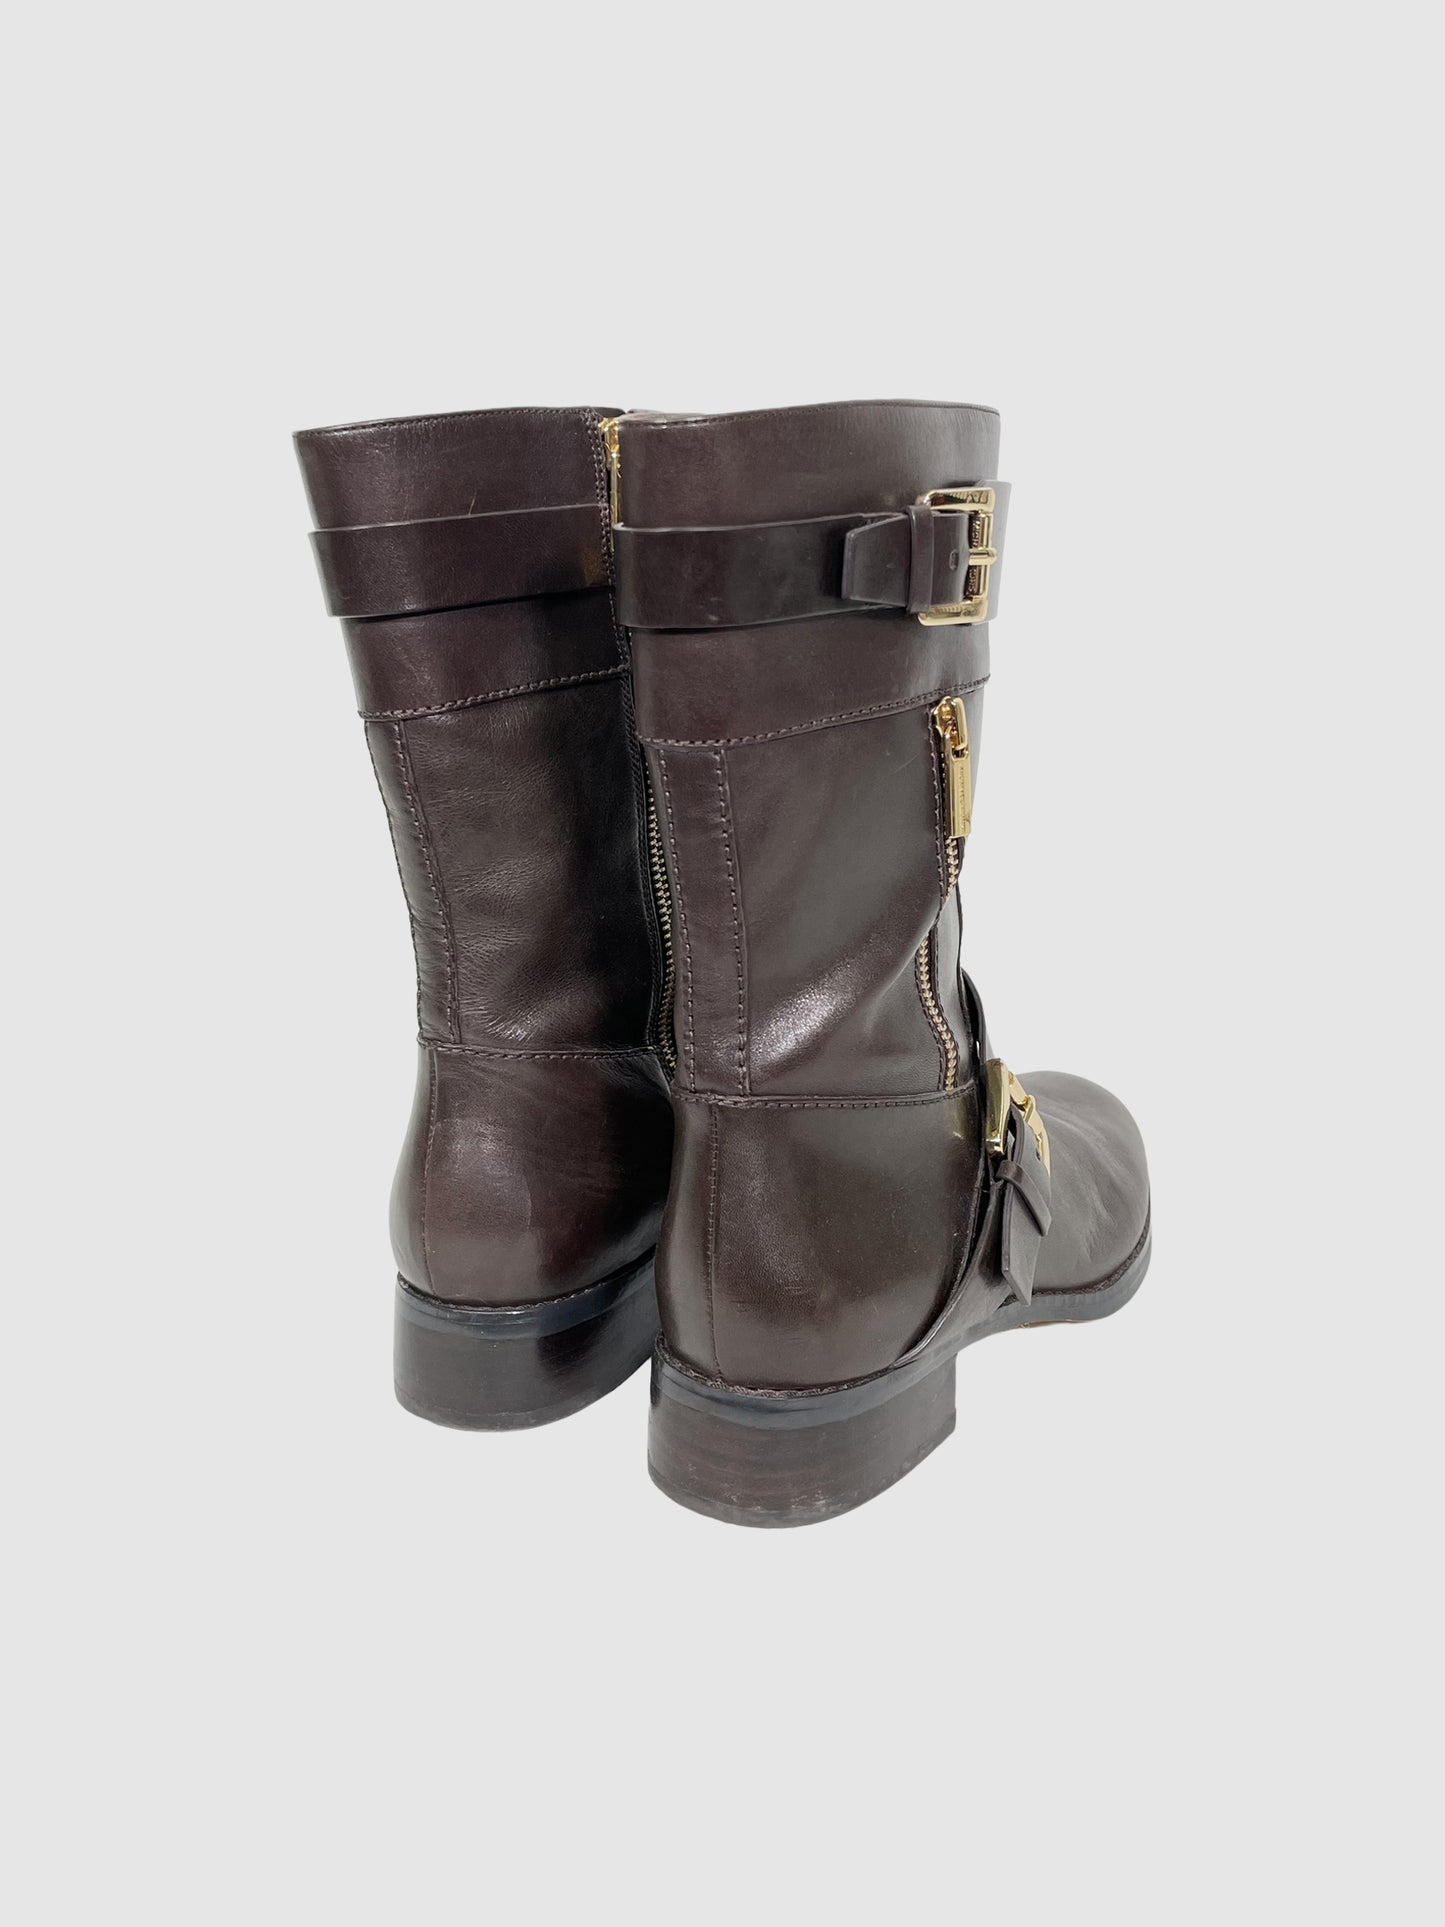 Michael Kors Mid-Calf Boots - Size 8